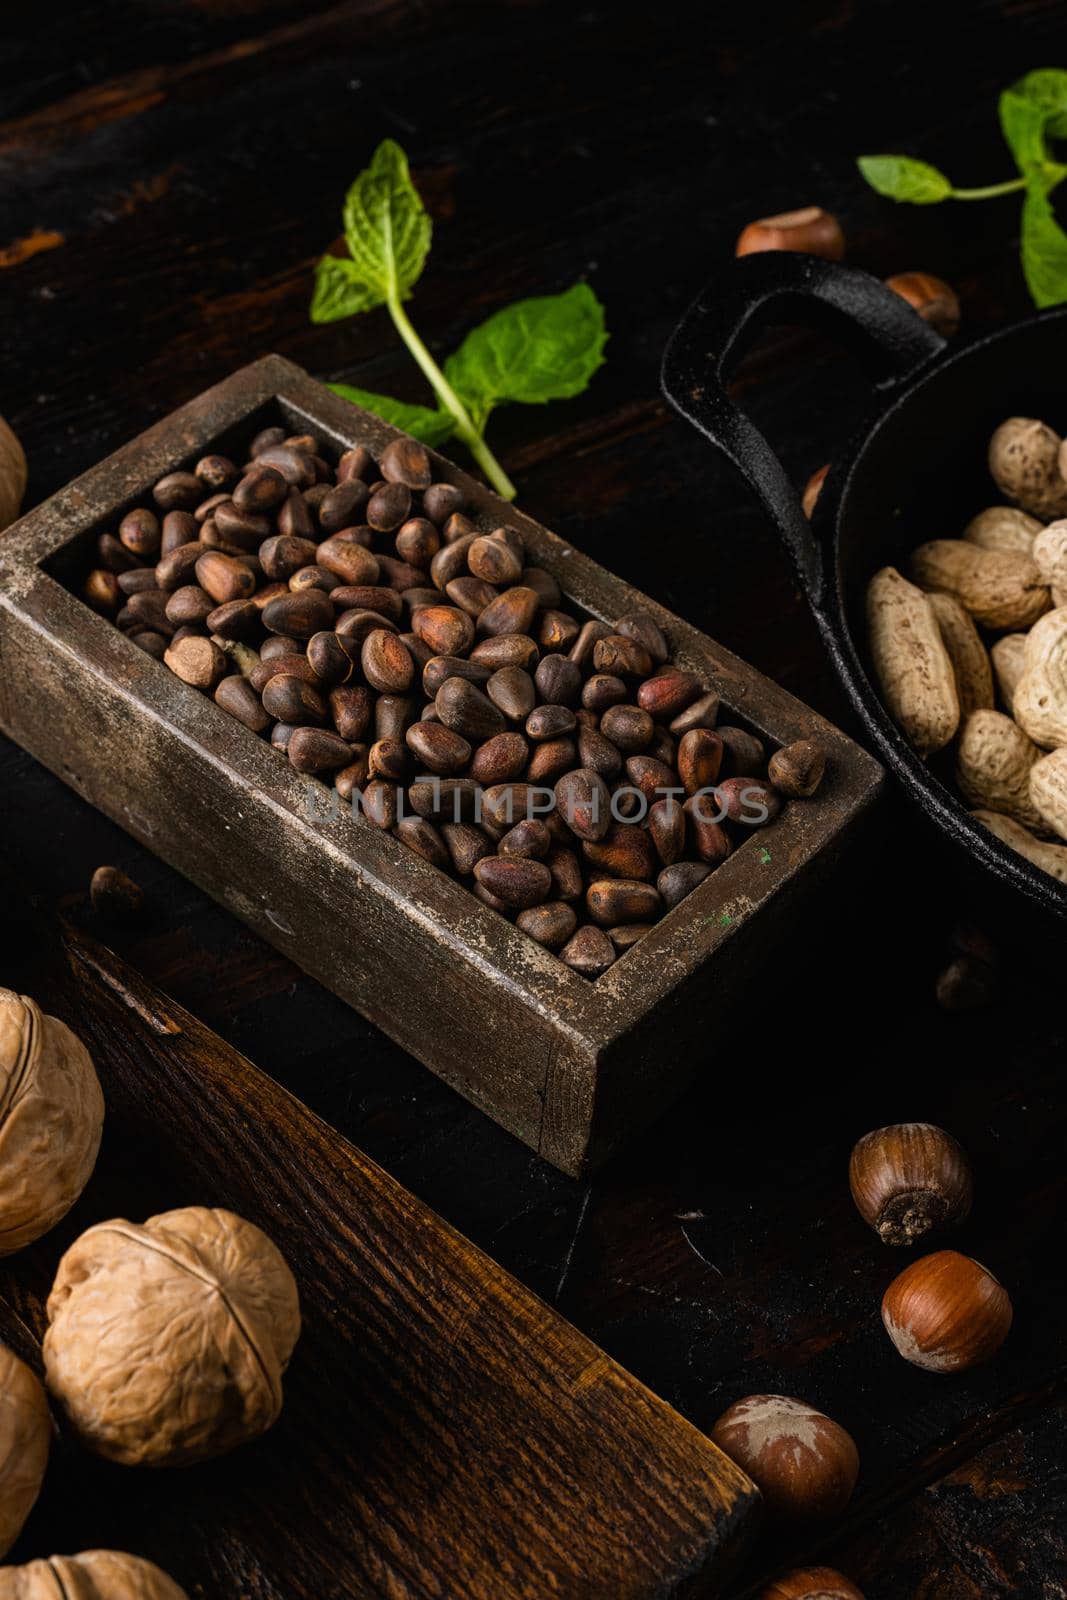 Cedar wild organic nut, on old dark wooden table background by Ilianesolenyi